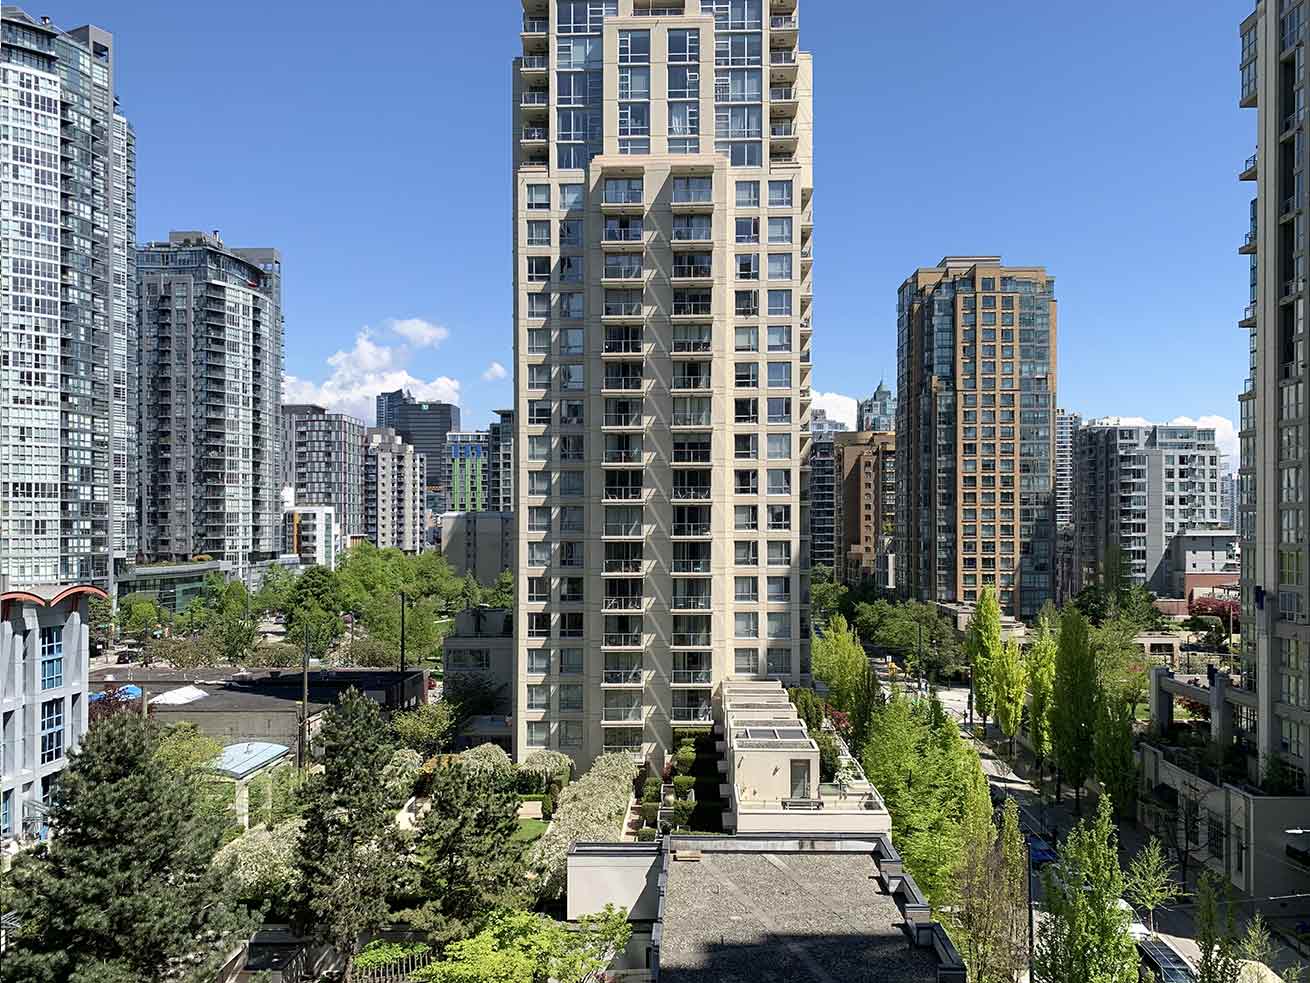 Vancouver apartments for rent oscar studio balcony view